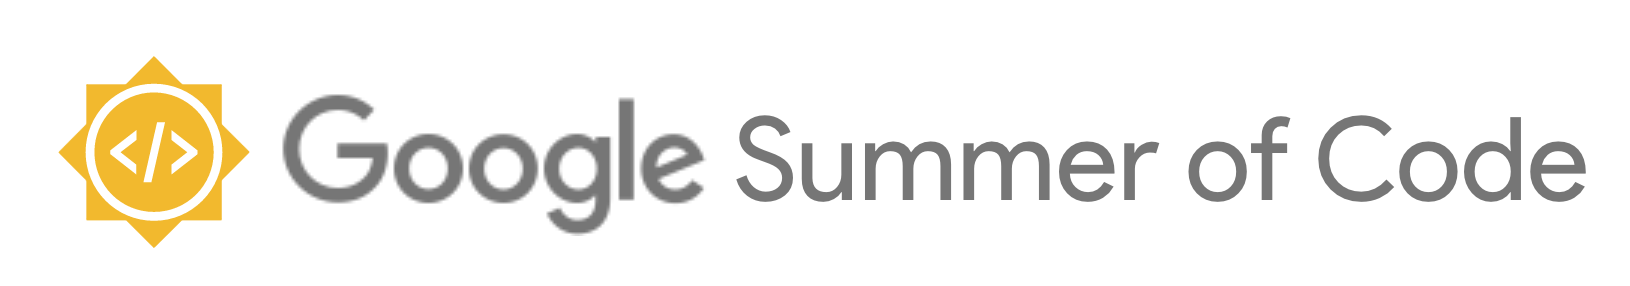 Google Summer of Code with TensorFlow Model Garden feature image